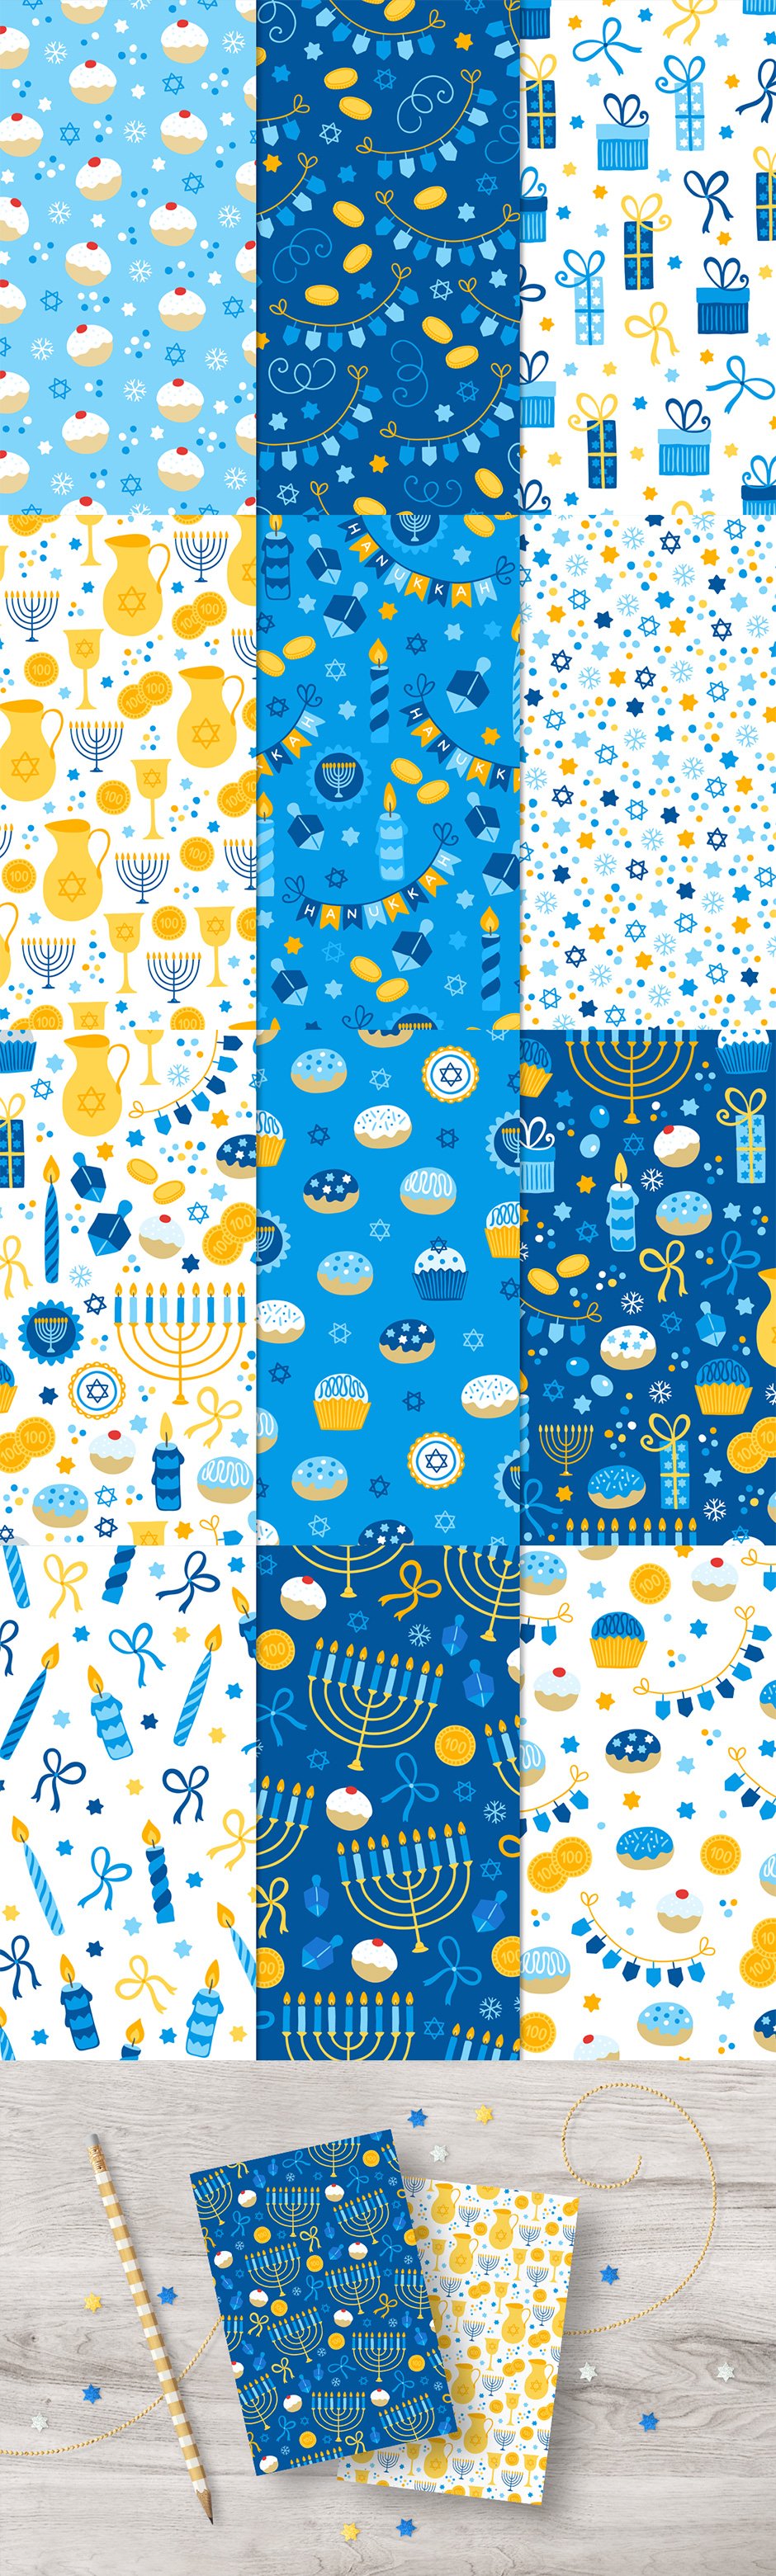 12 Hanukkah Seamless Patterns